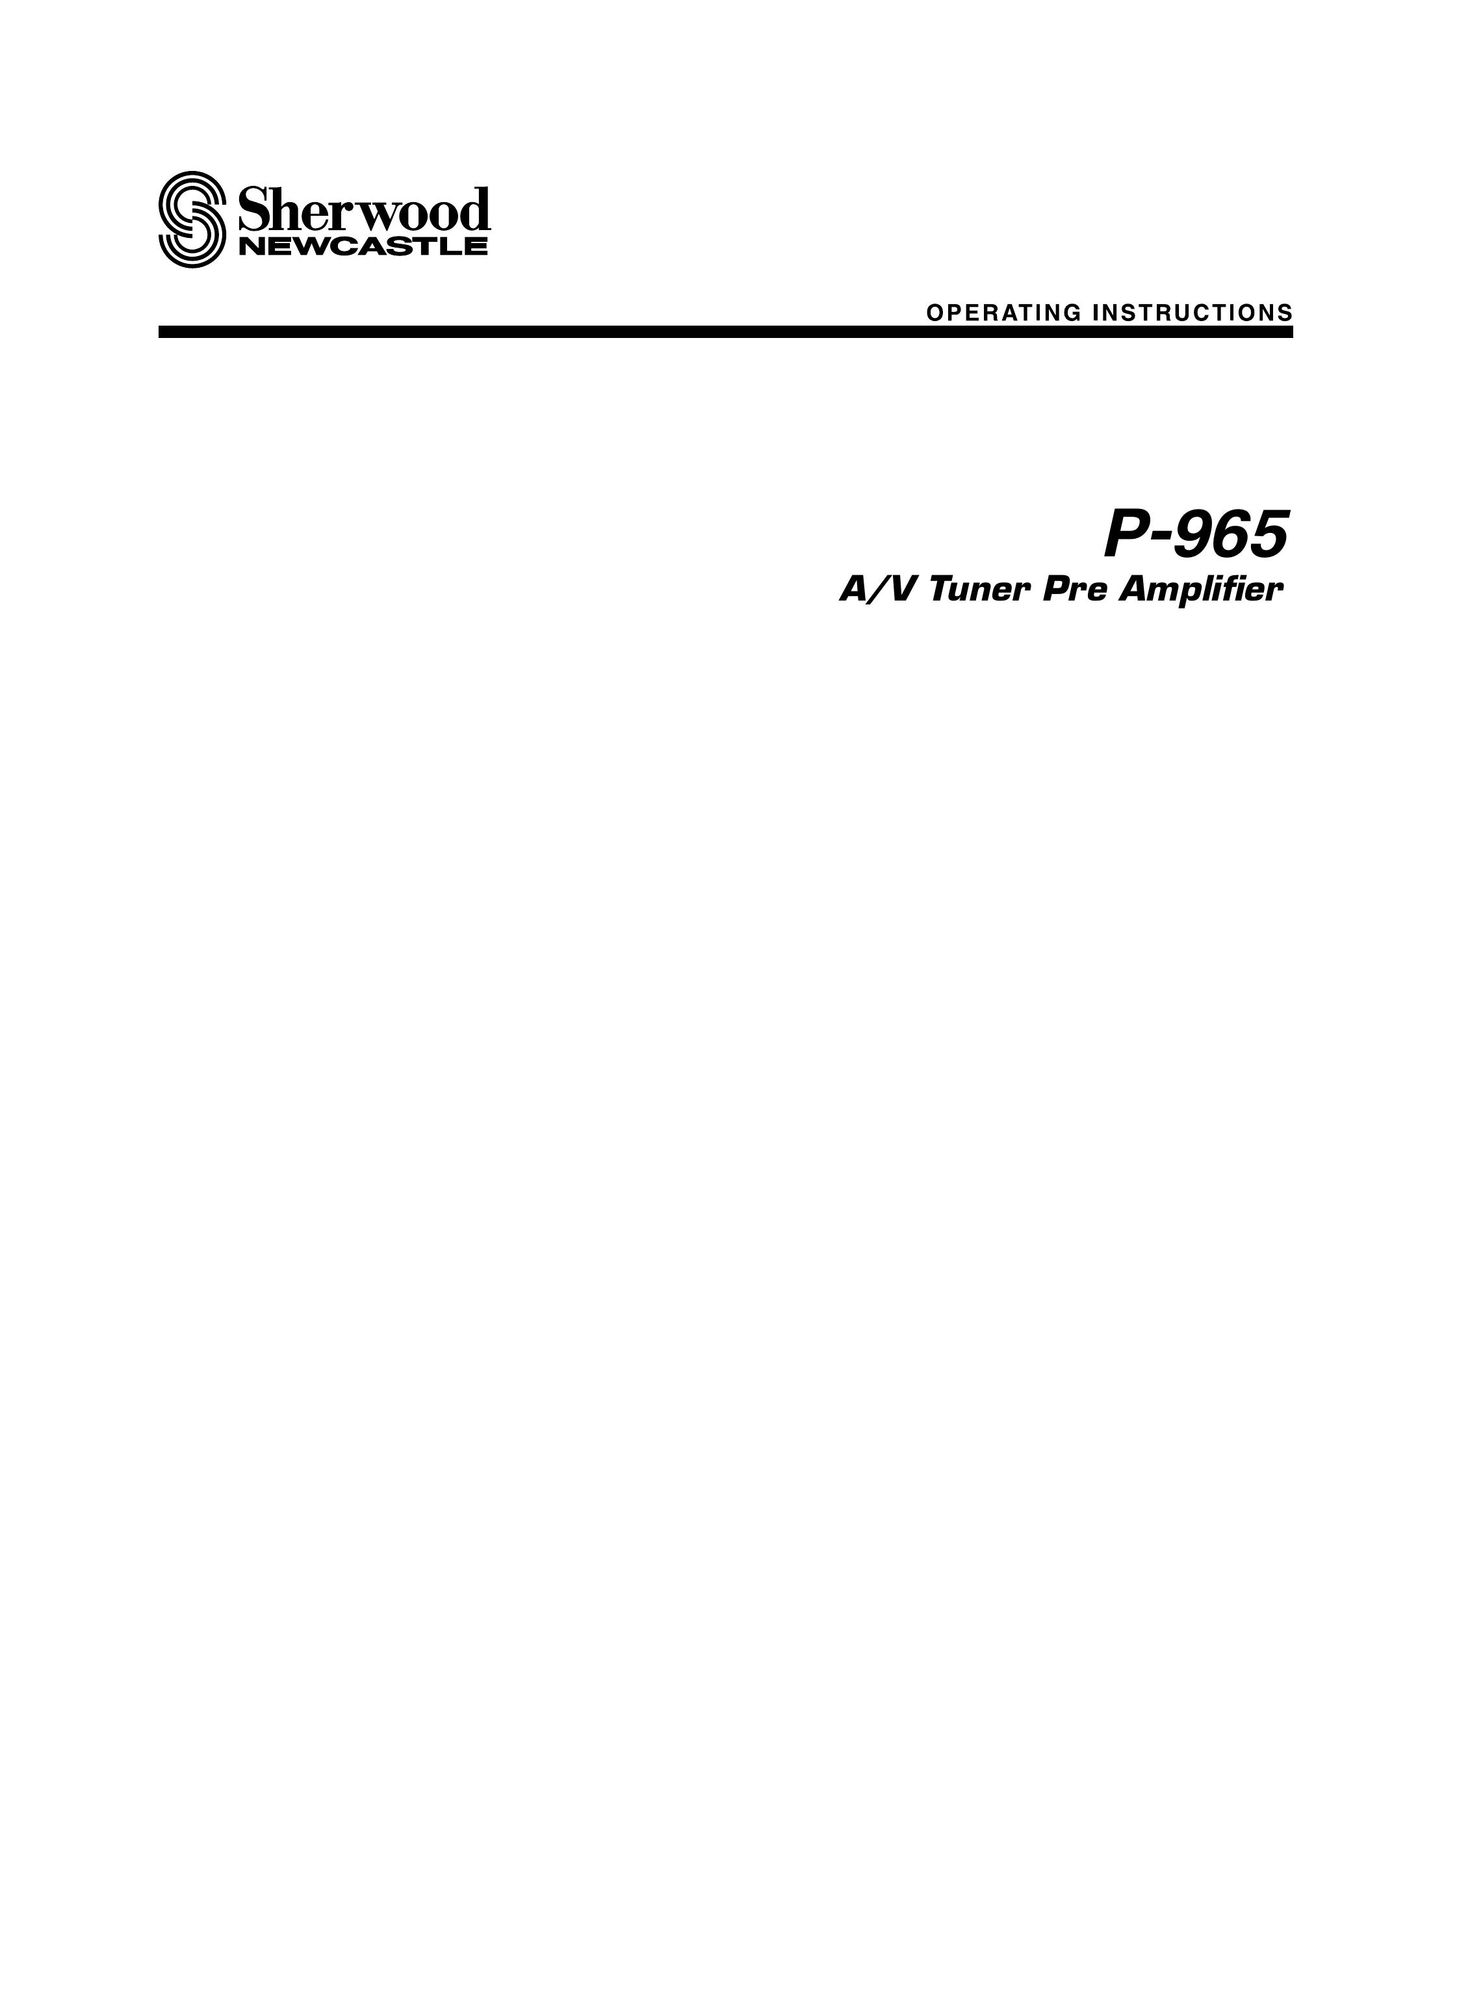 Sherwood P-965 Stereo Amplifier User Manual